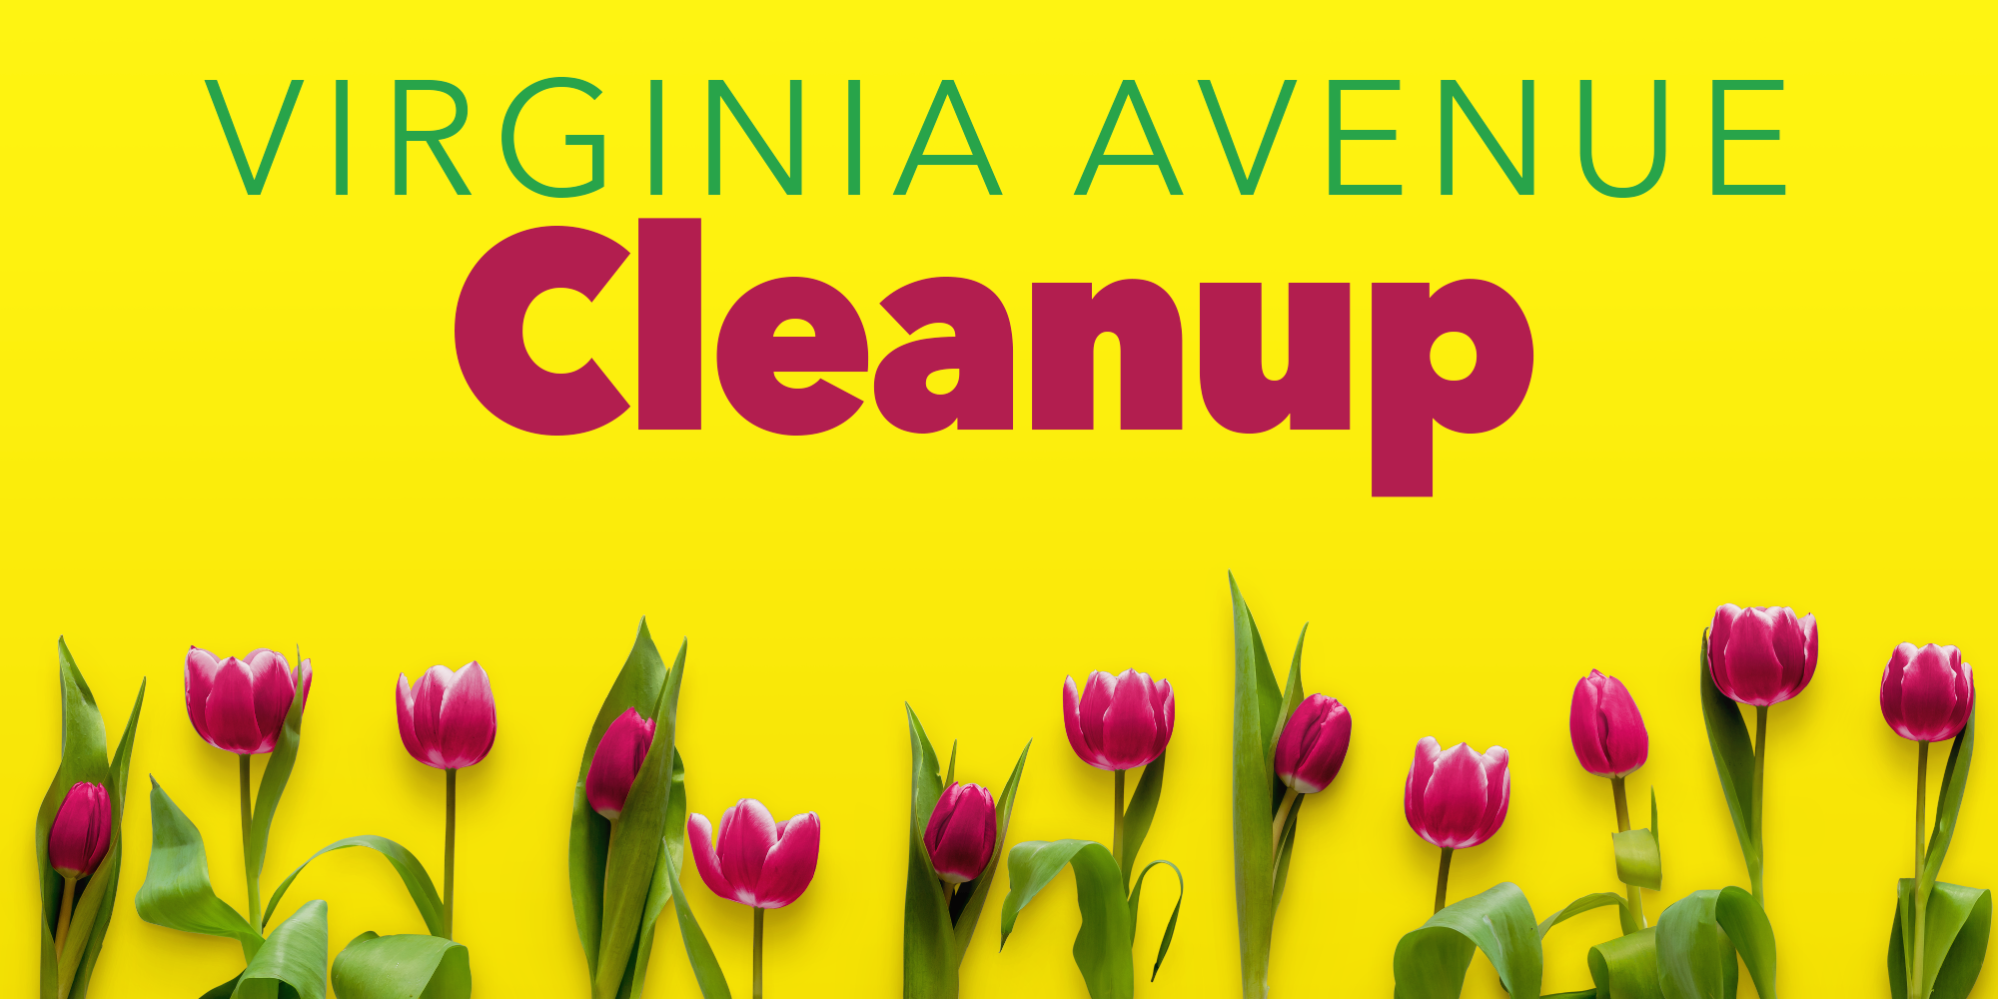 Virginia Avenue Cleanup